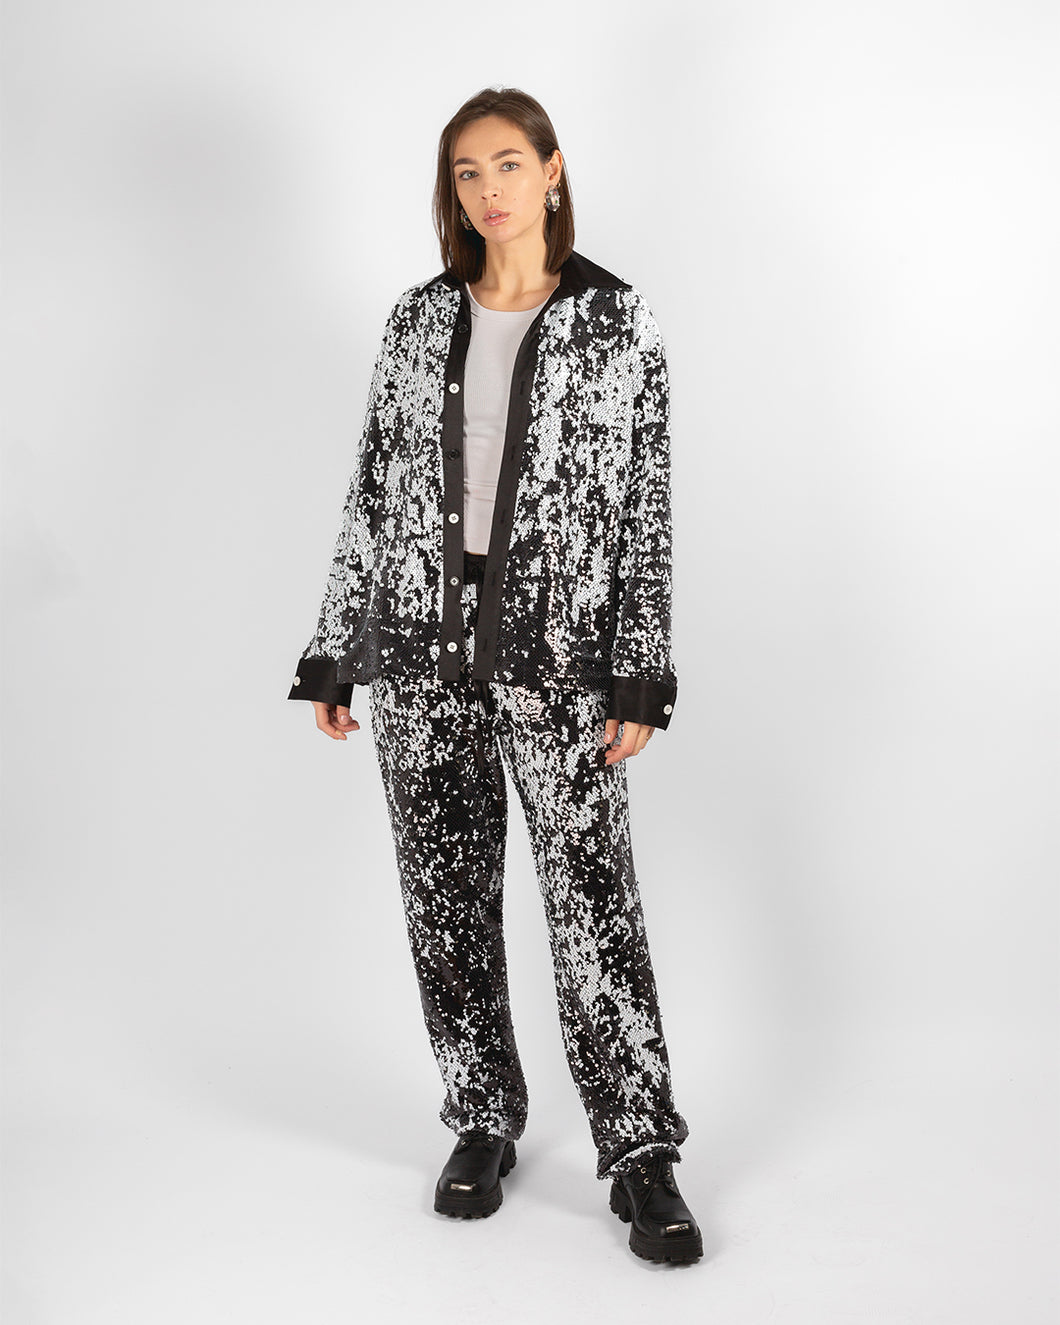 Unisex Black And White Reversible Sequins Urban Pyjamas